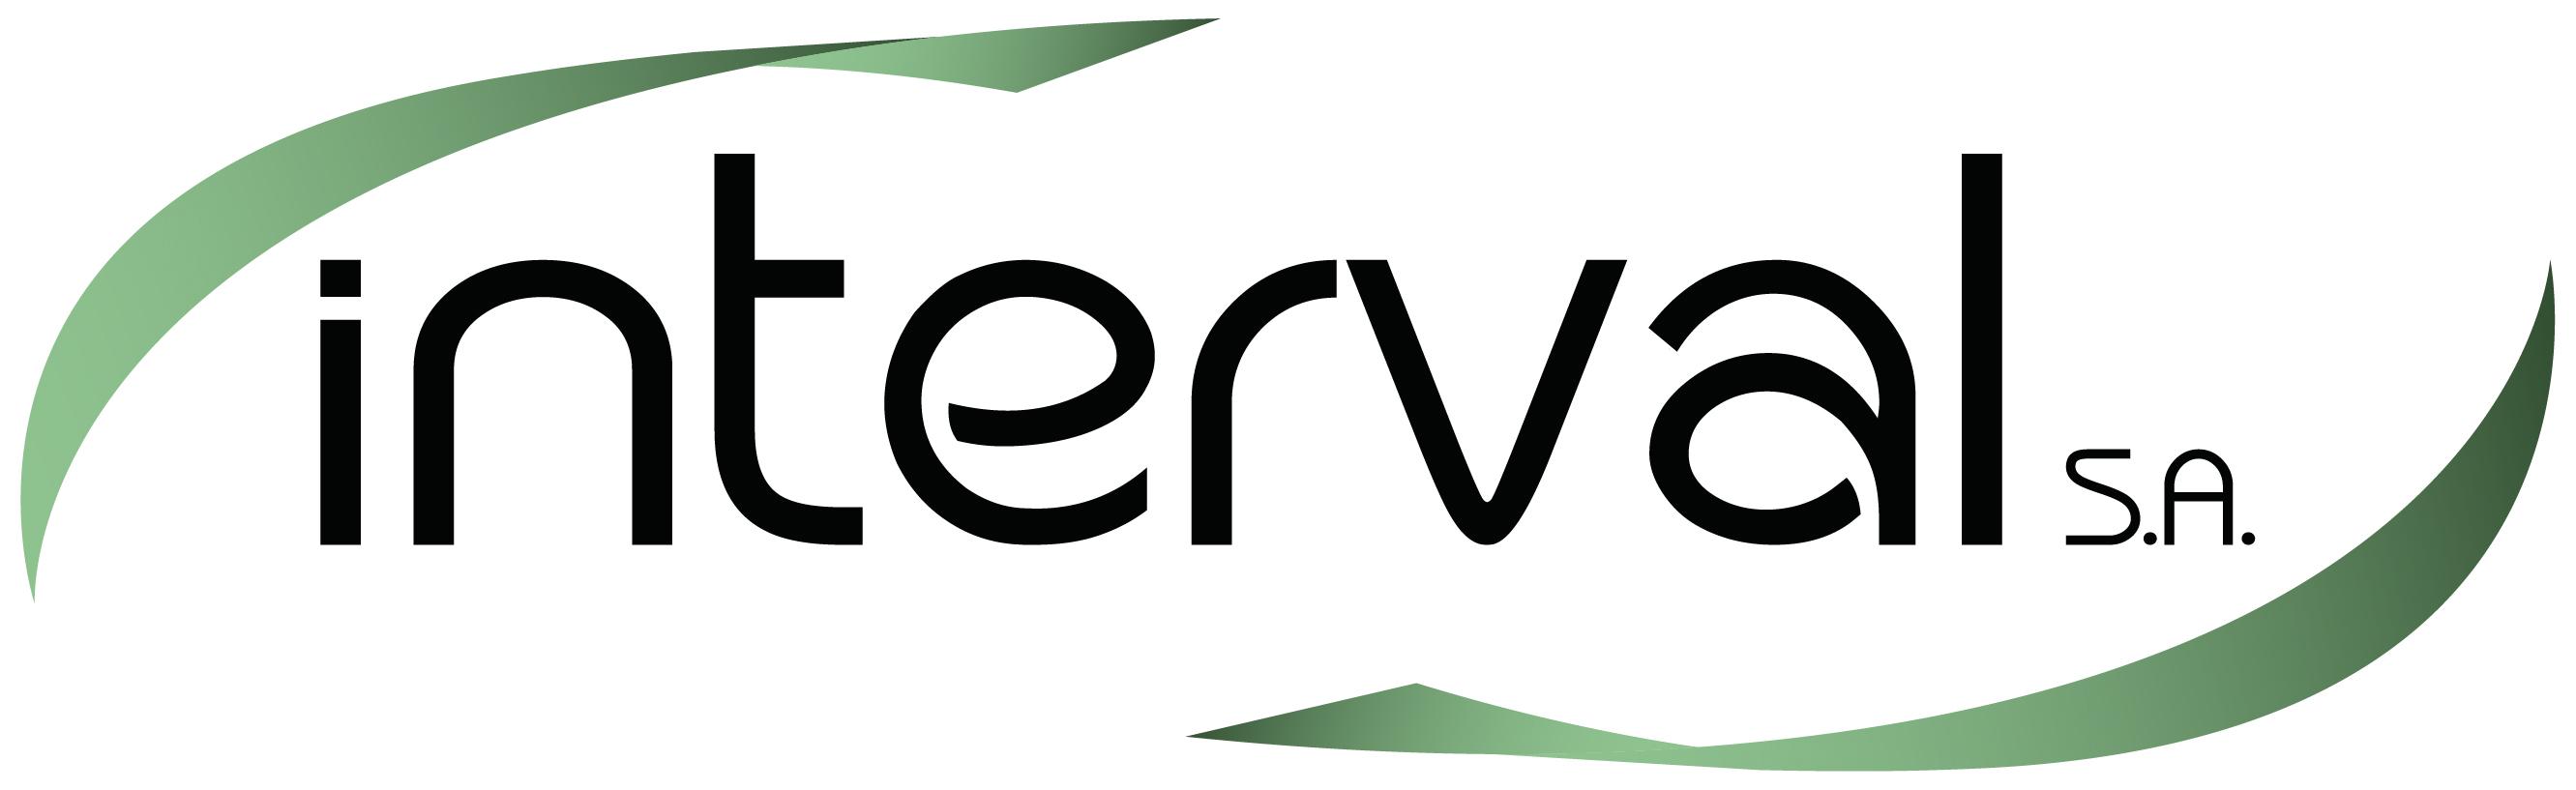 Logo.Interval.jpeg